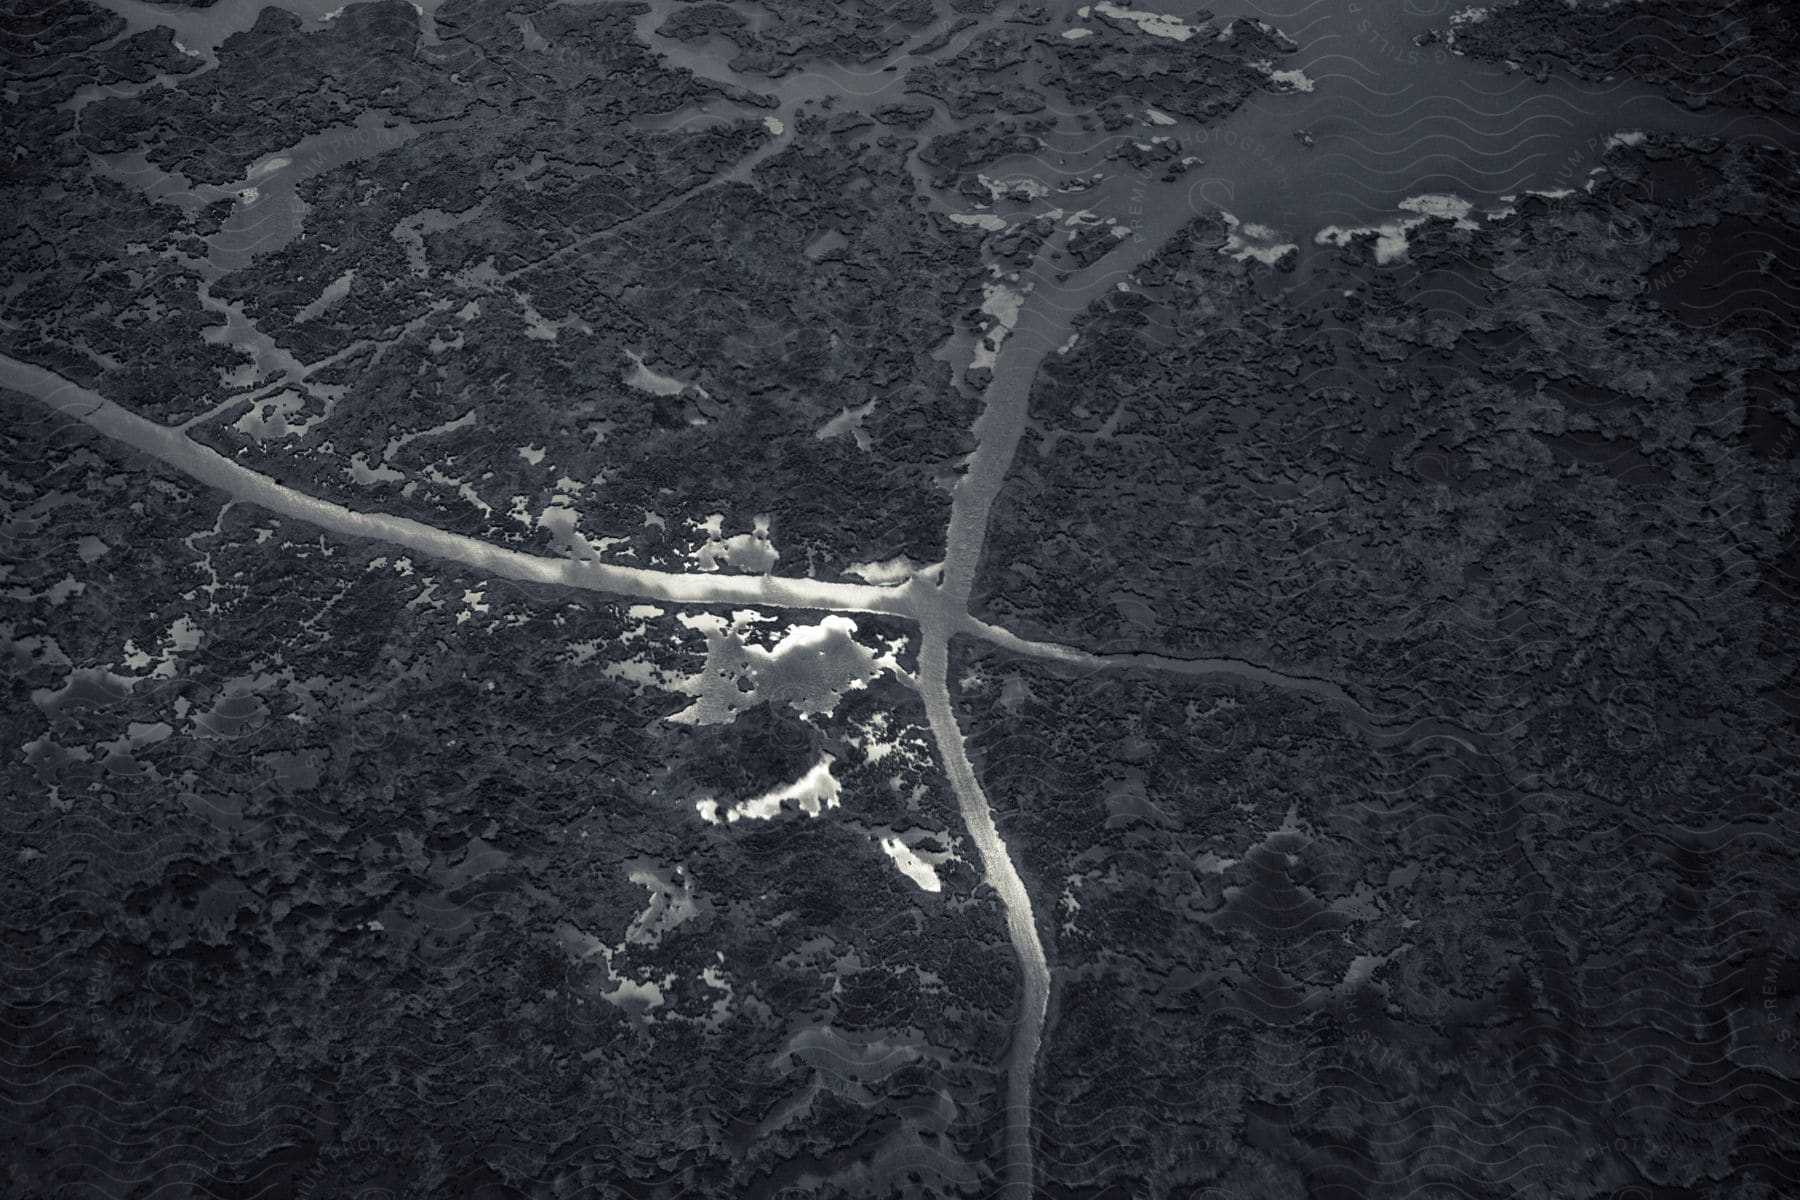 Waterways intersect in rough terrain near the coast